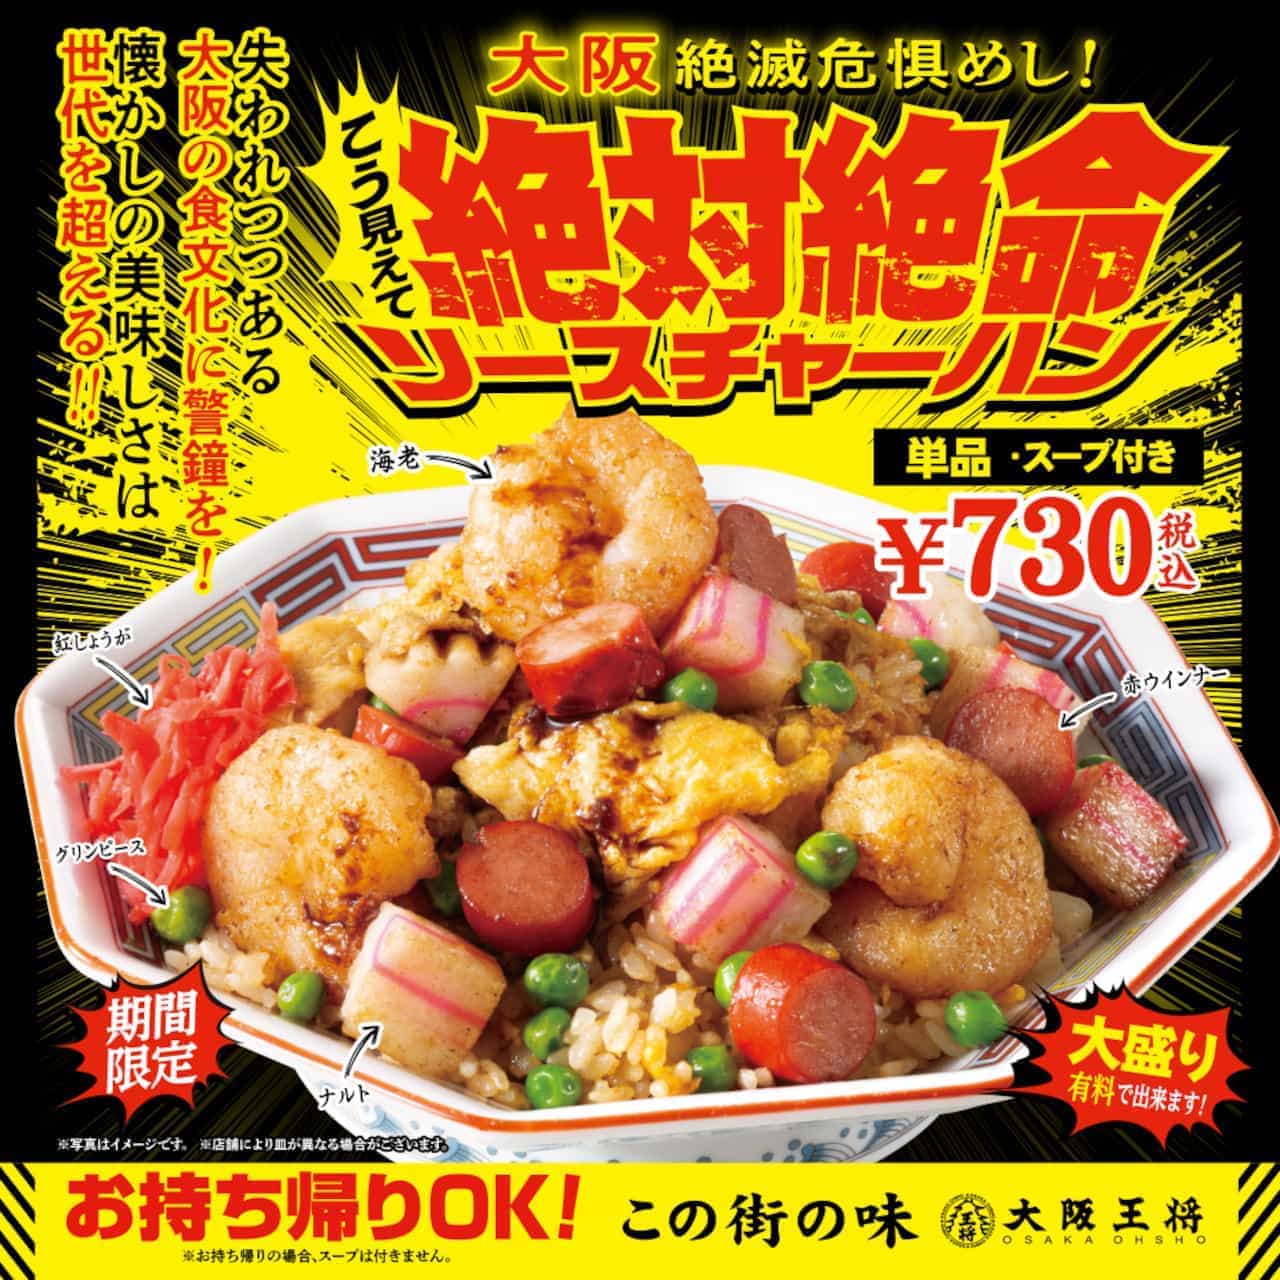 Osaka Ousho "Absolutely Fierce Sauce Fried Rice